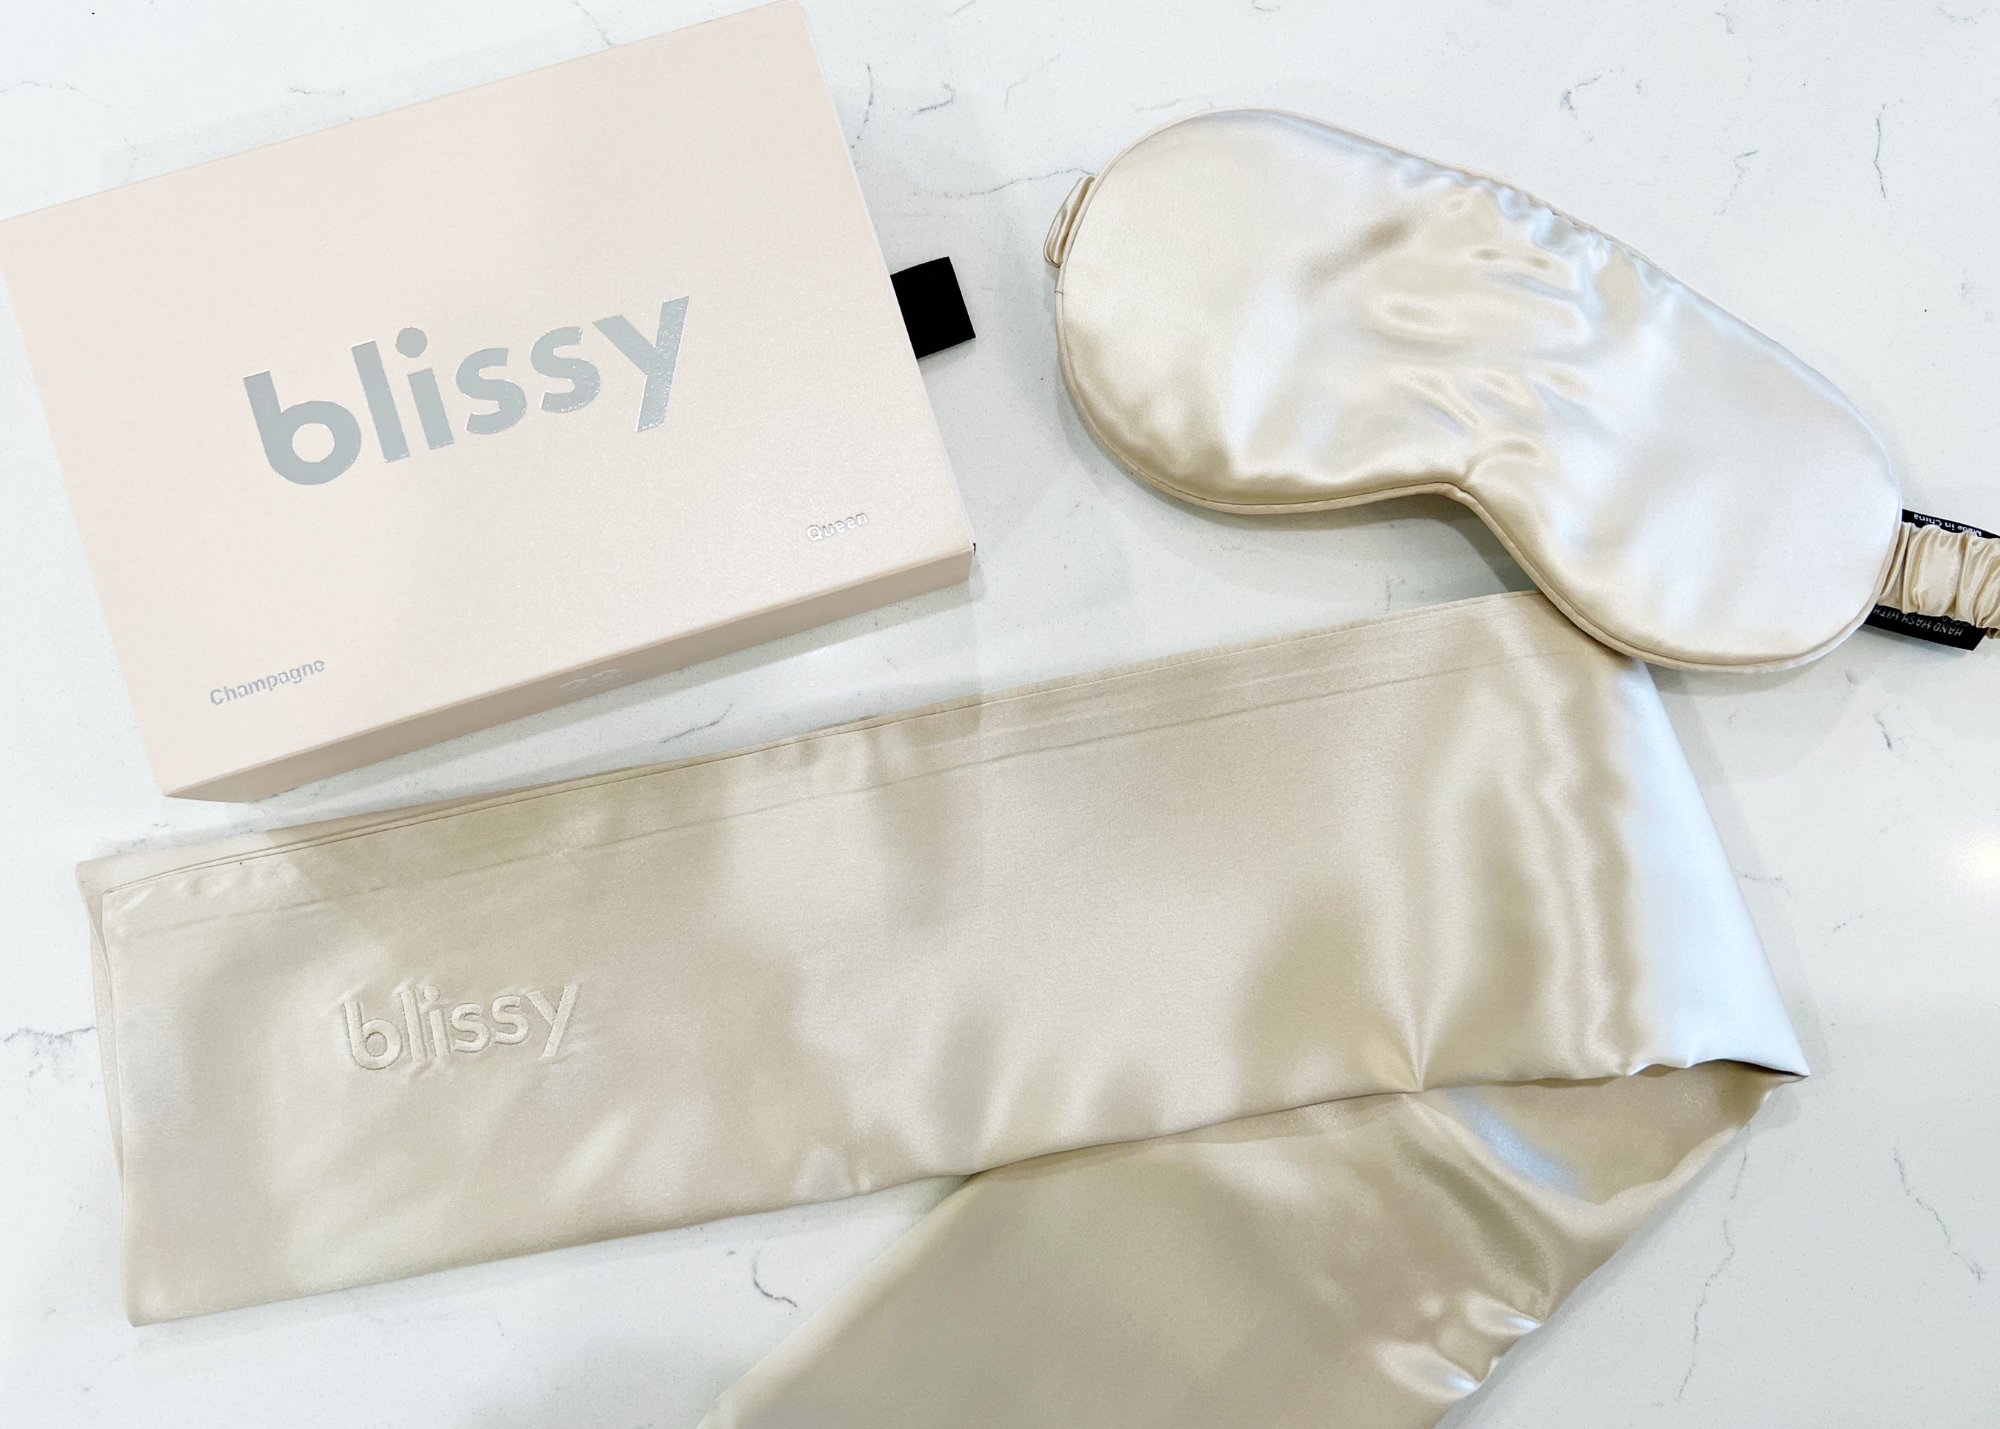 Blissy Pillowcase Review